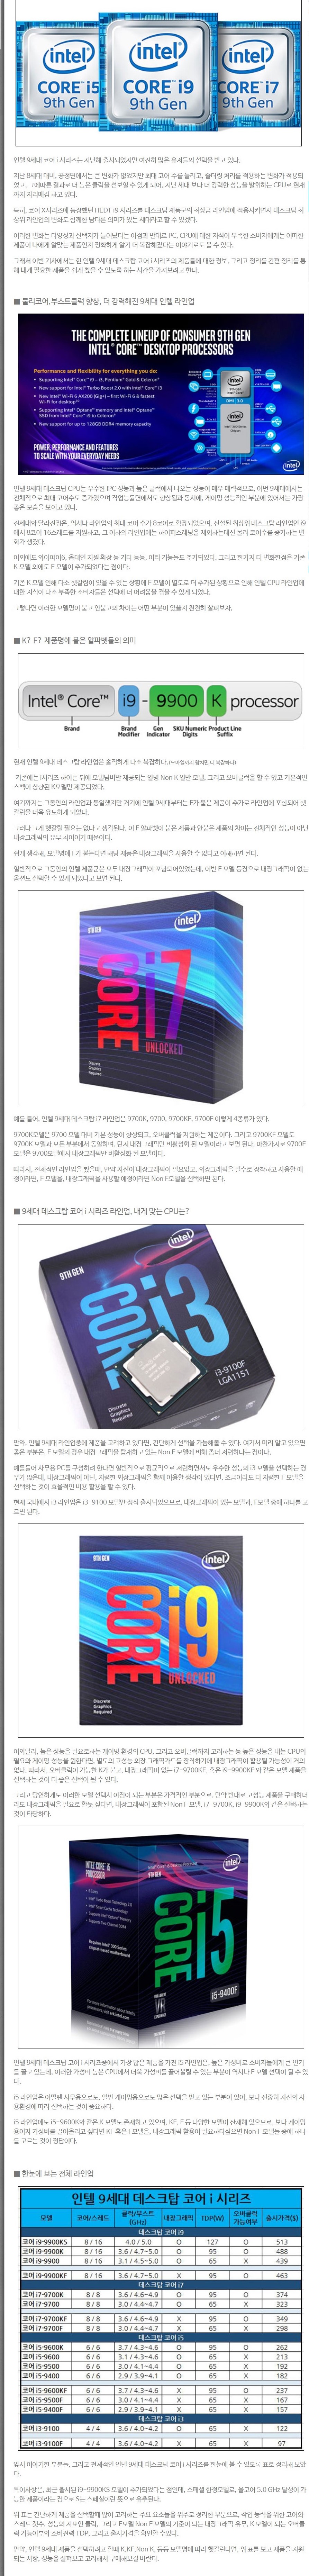 Intel cpu.jpg